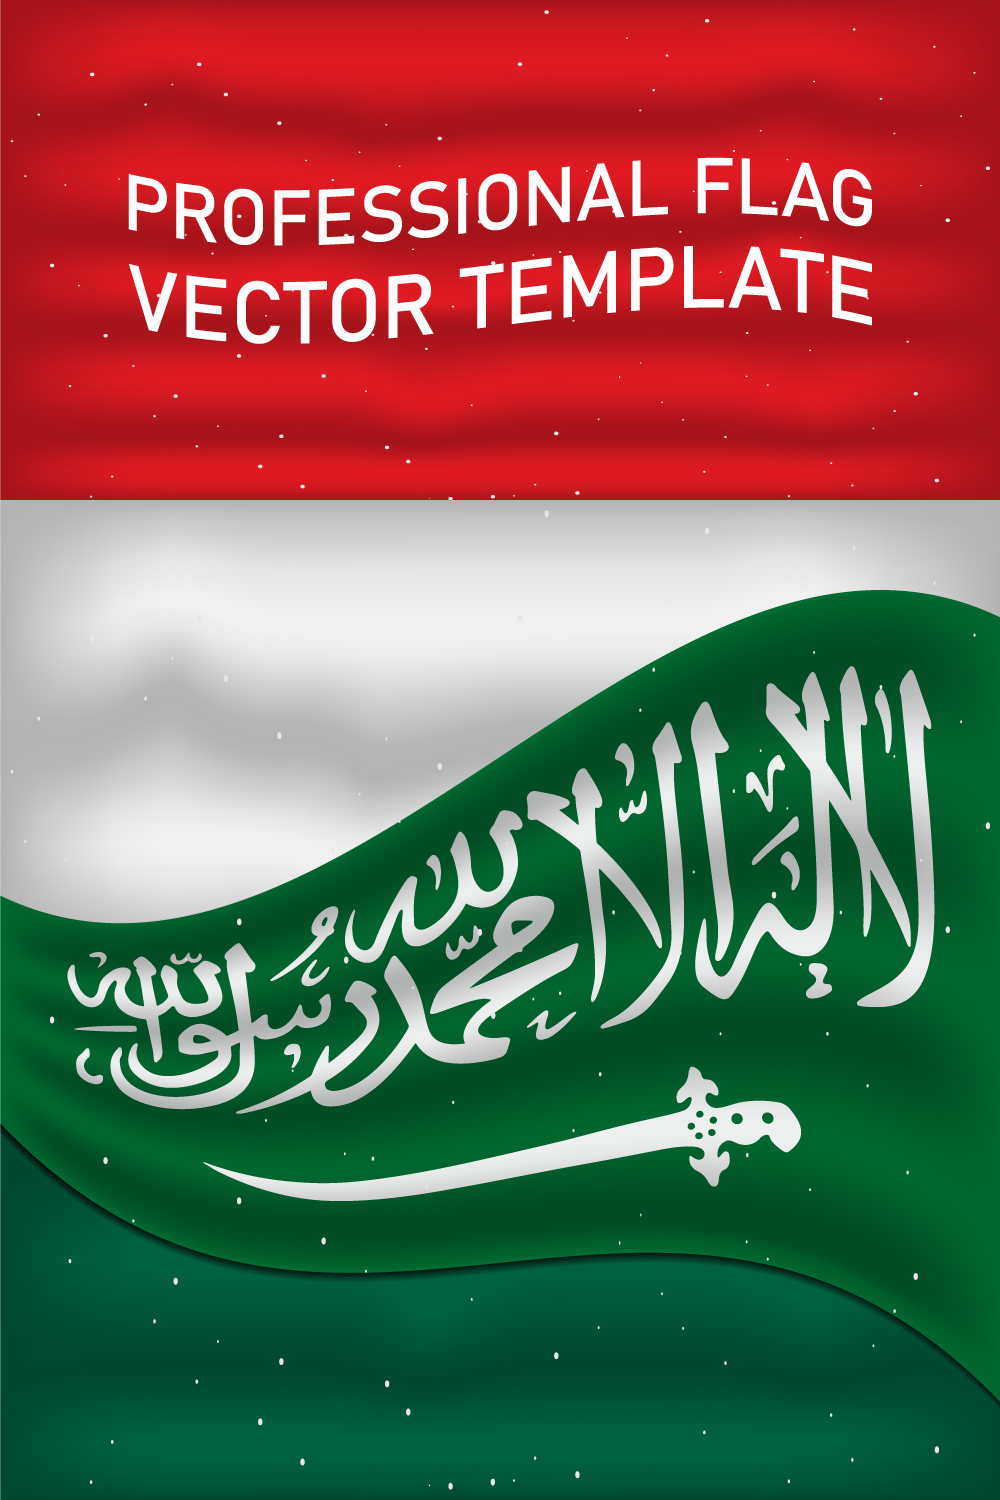 Colorful image of Saudi Arabia flag.